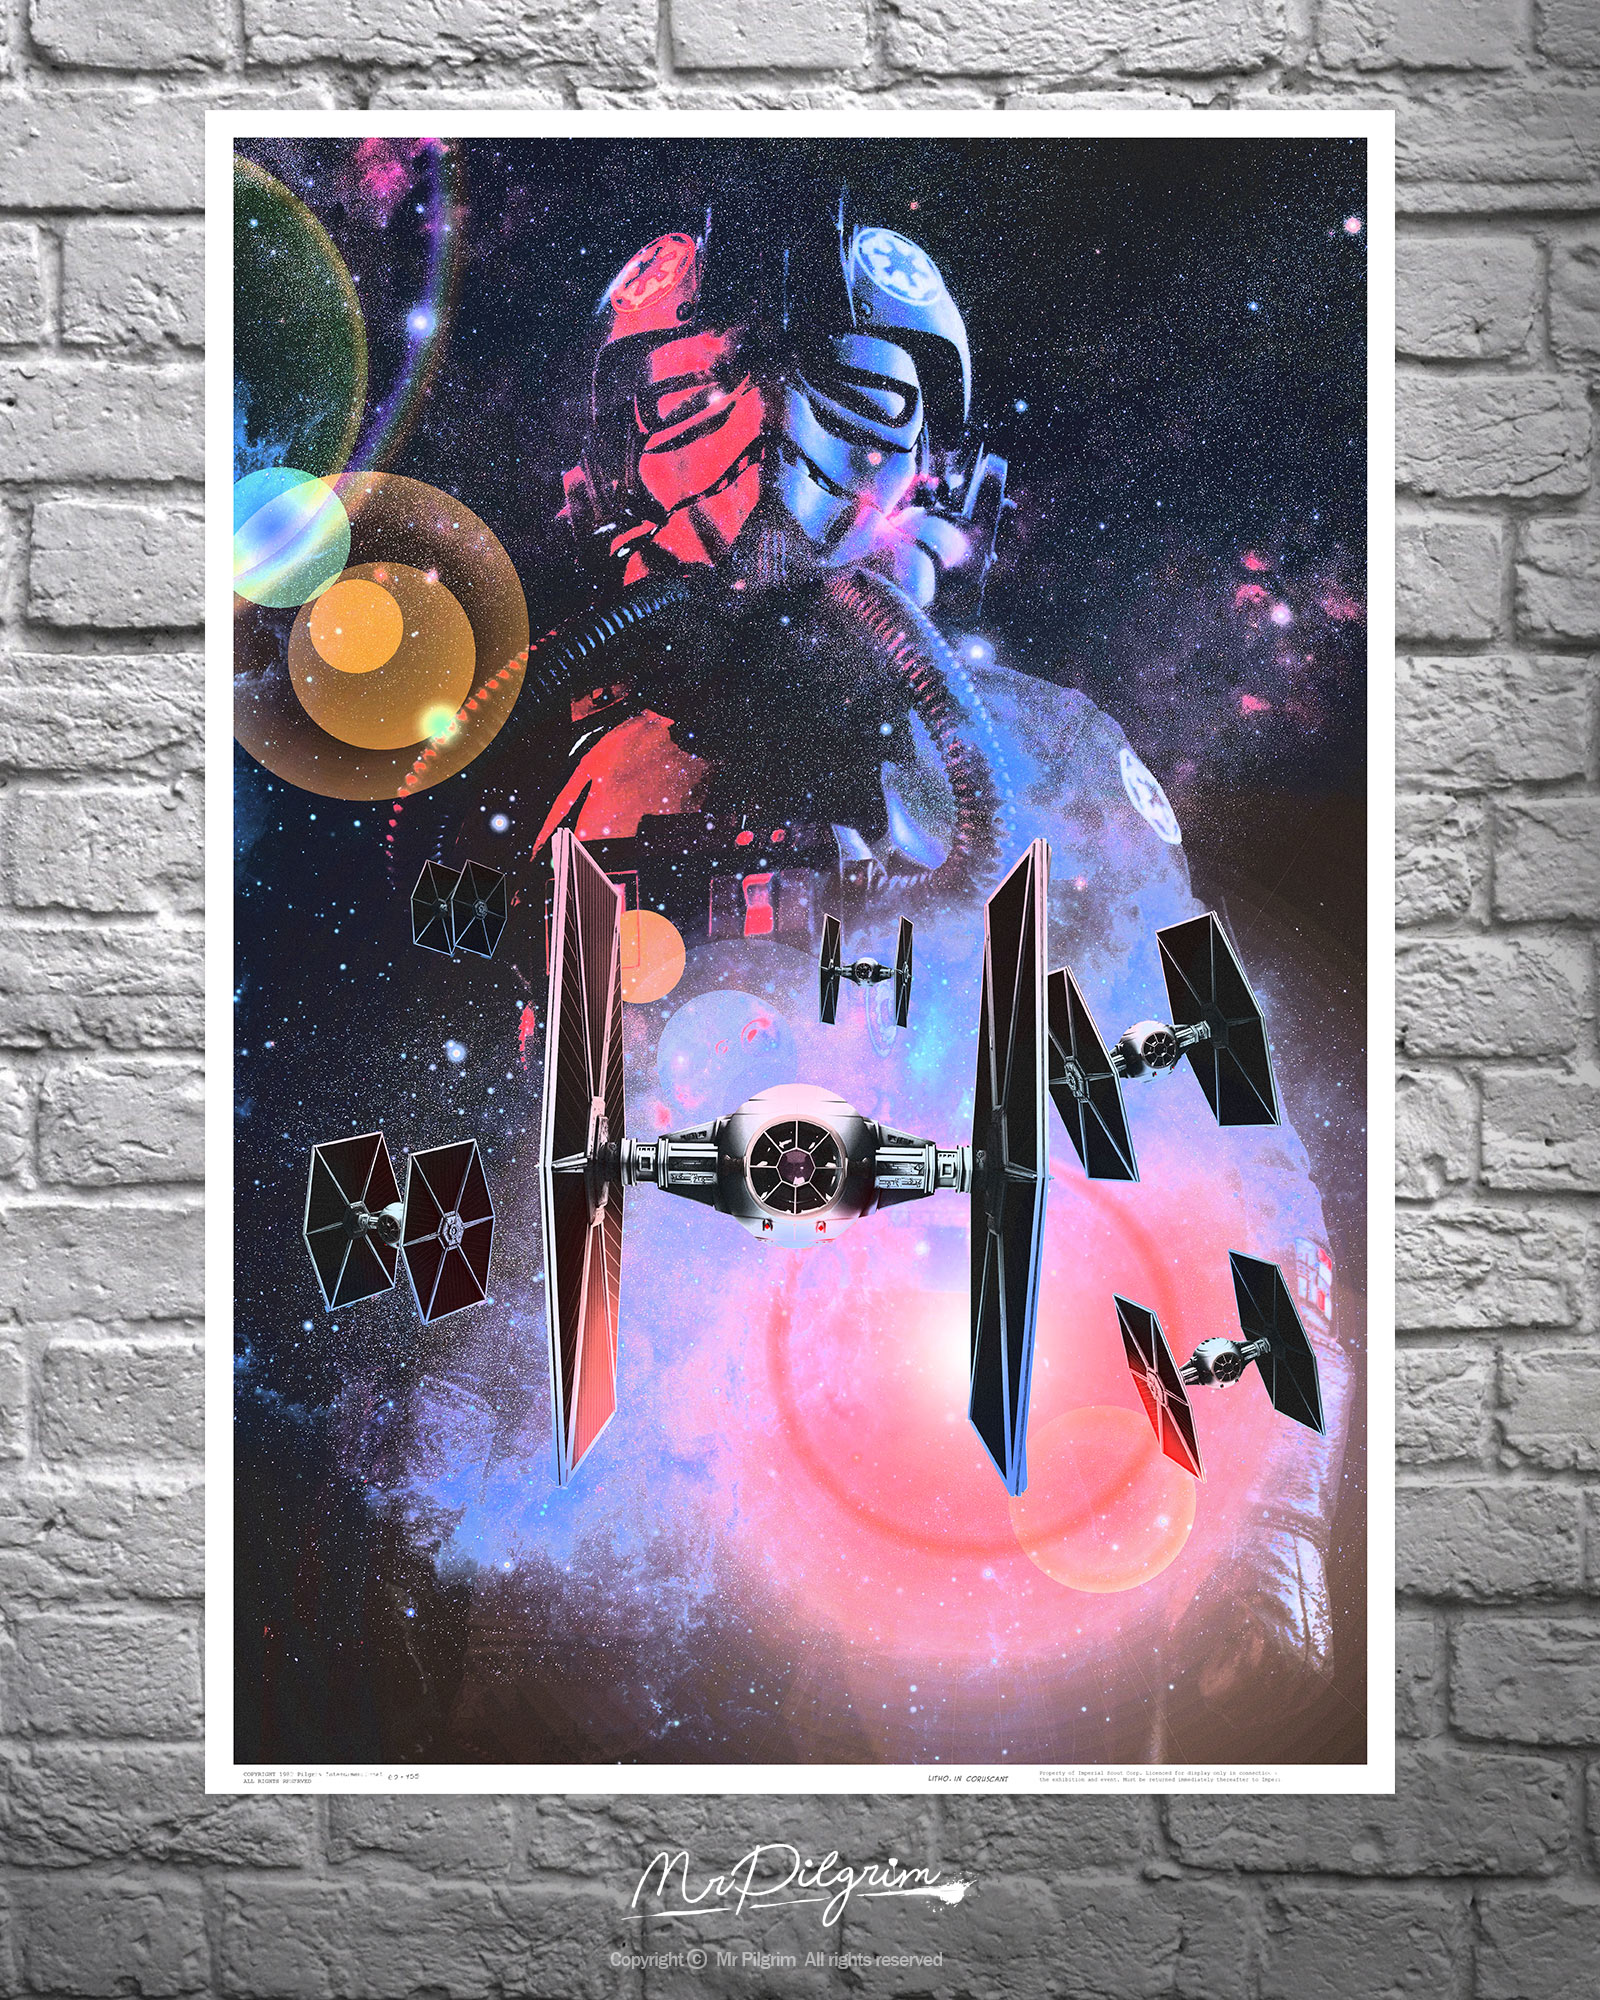 New Star Wars Stuff!  Tie Fighter Poster!